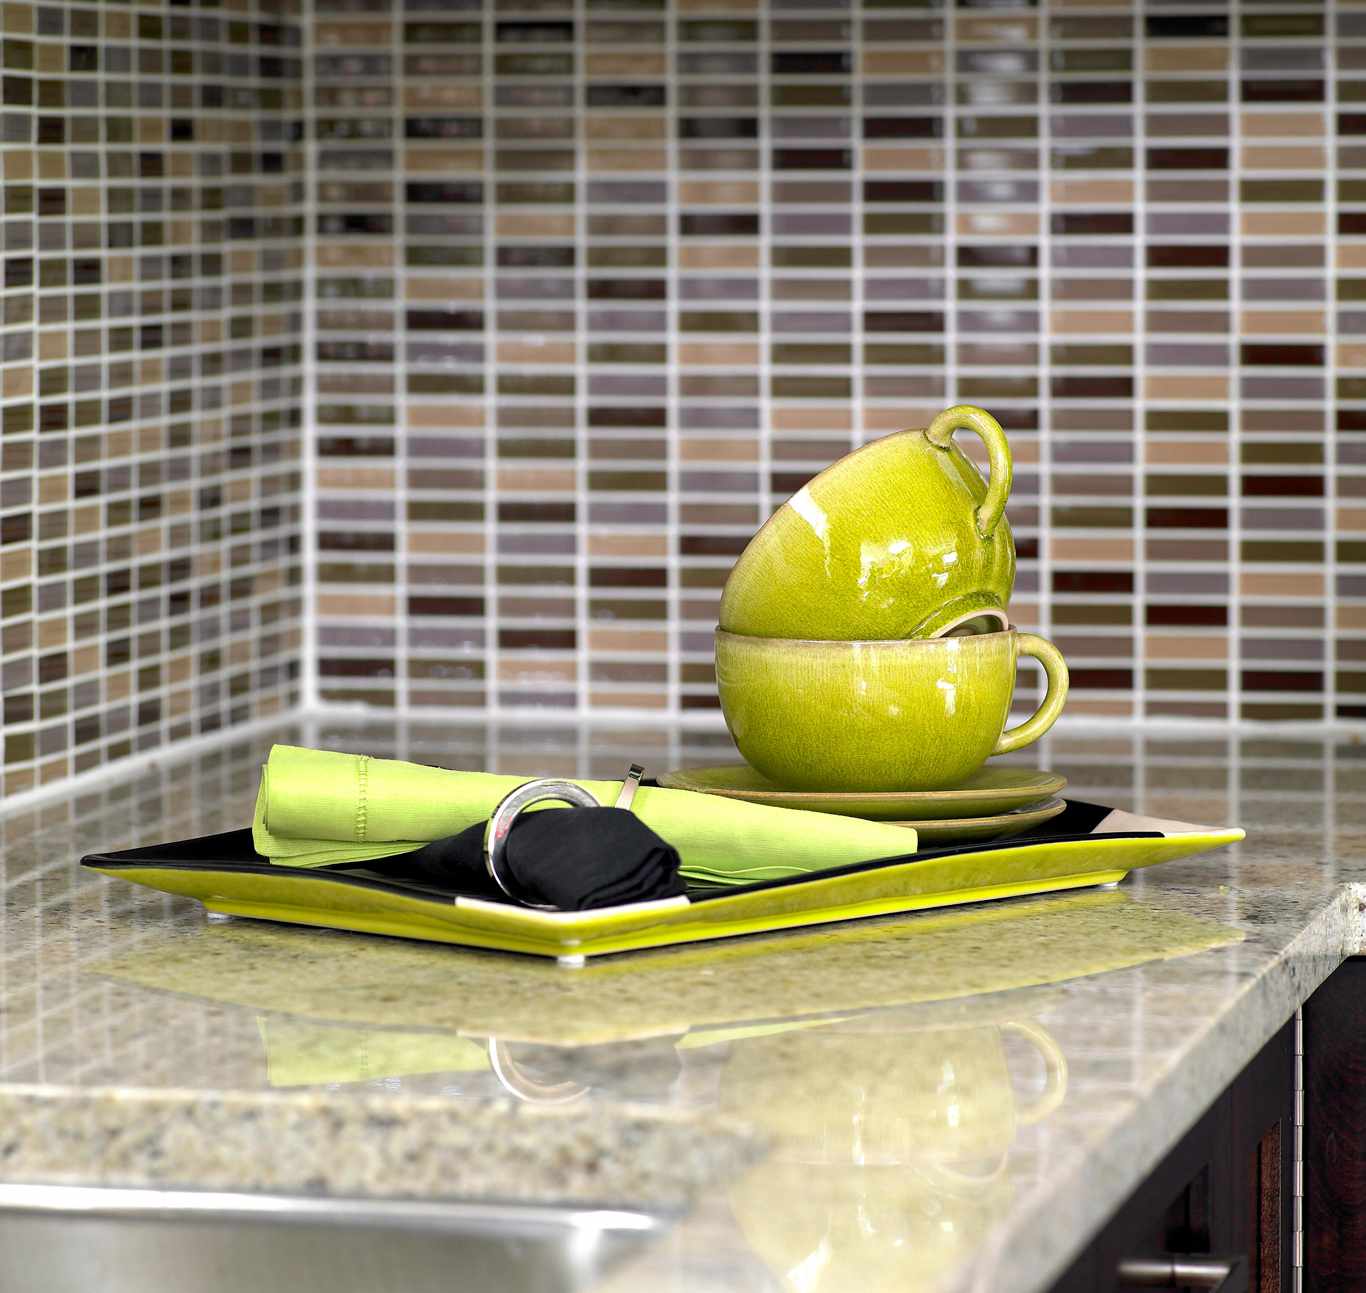 Granite Countertops in Modern Kitchens